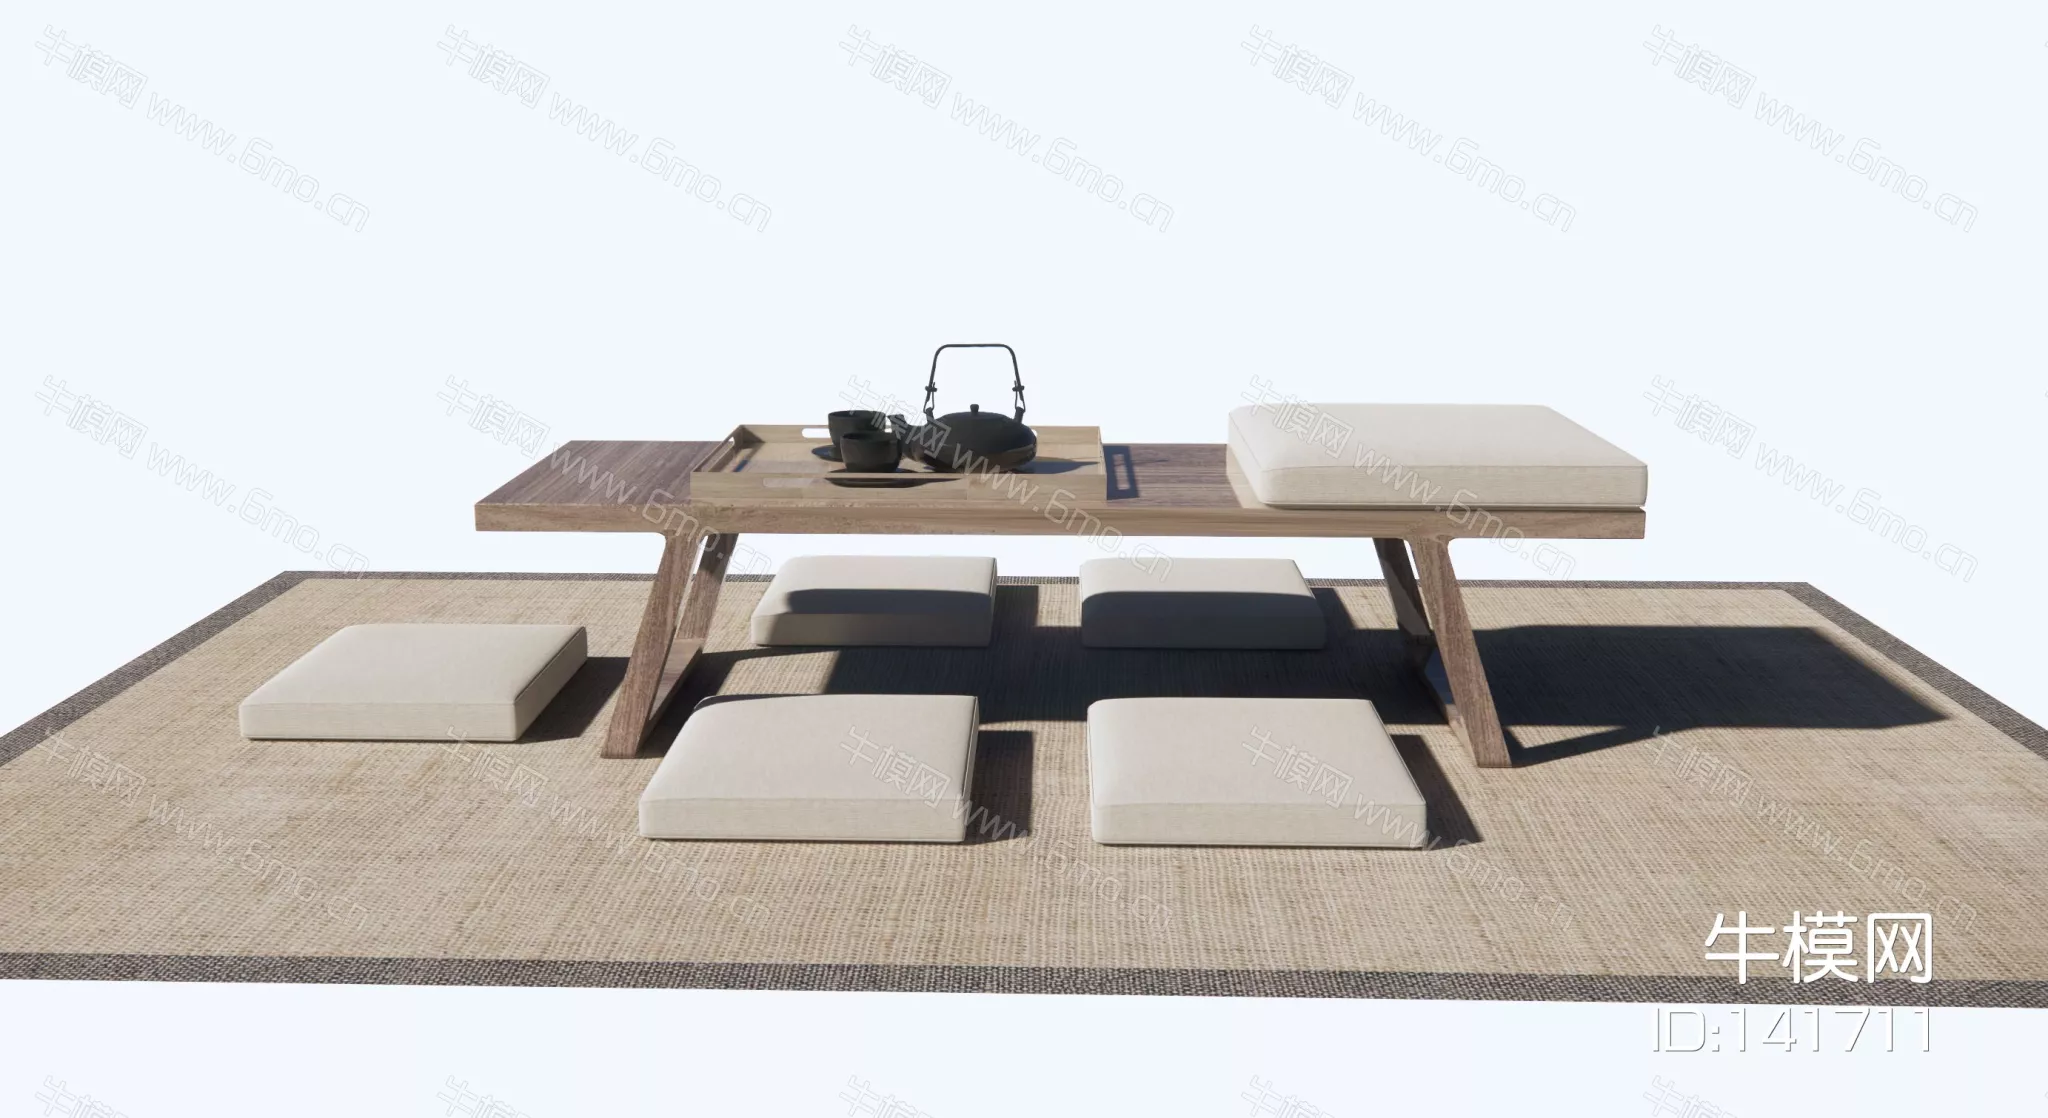 JAPANESE TEA TABLE SET - SKETCHUP 3D MODEL - ENSCAPE - 141711